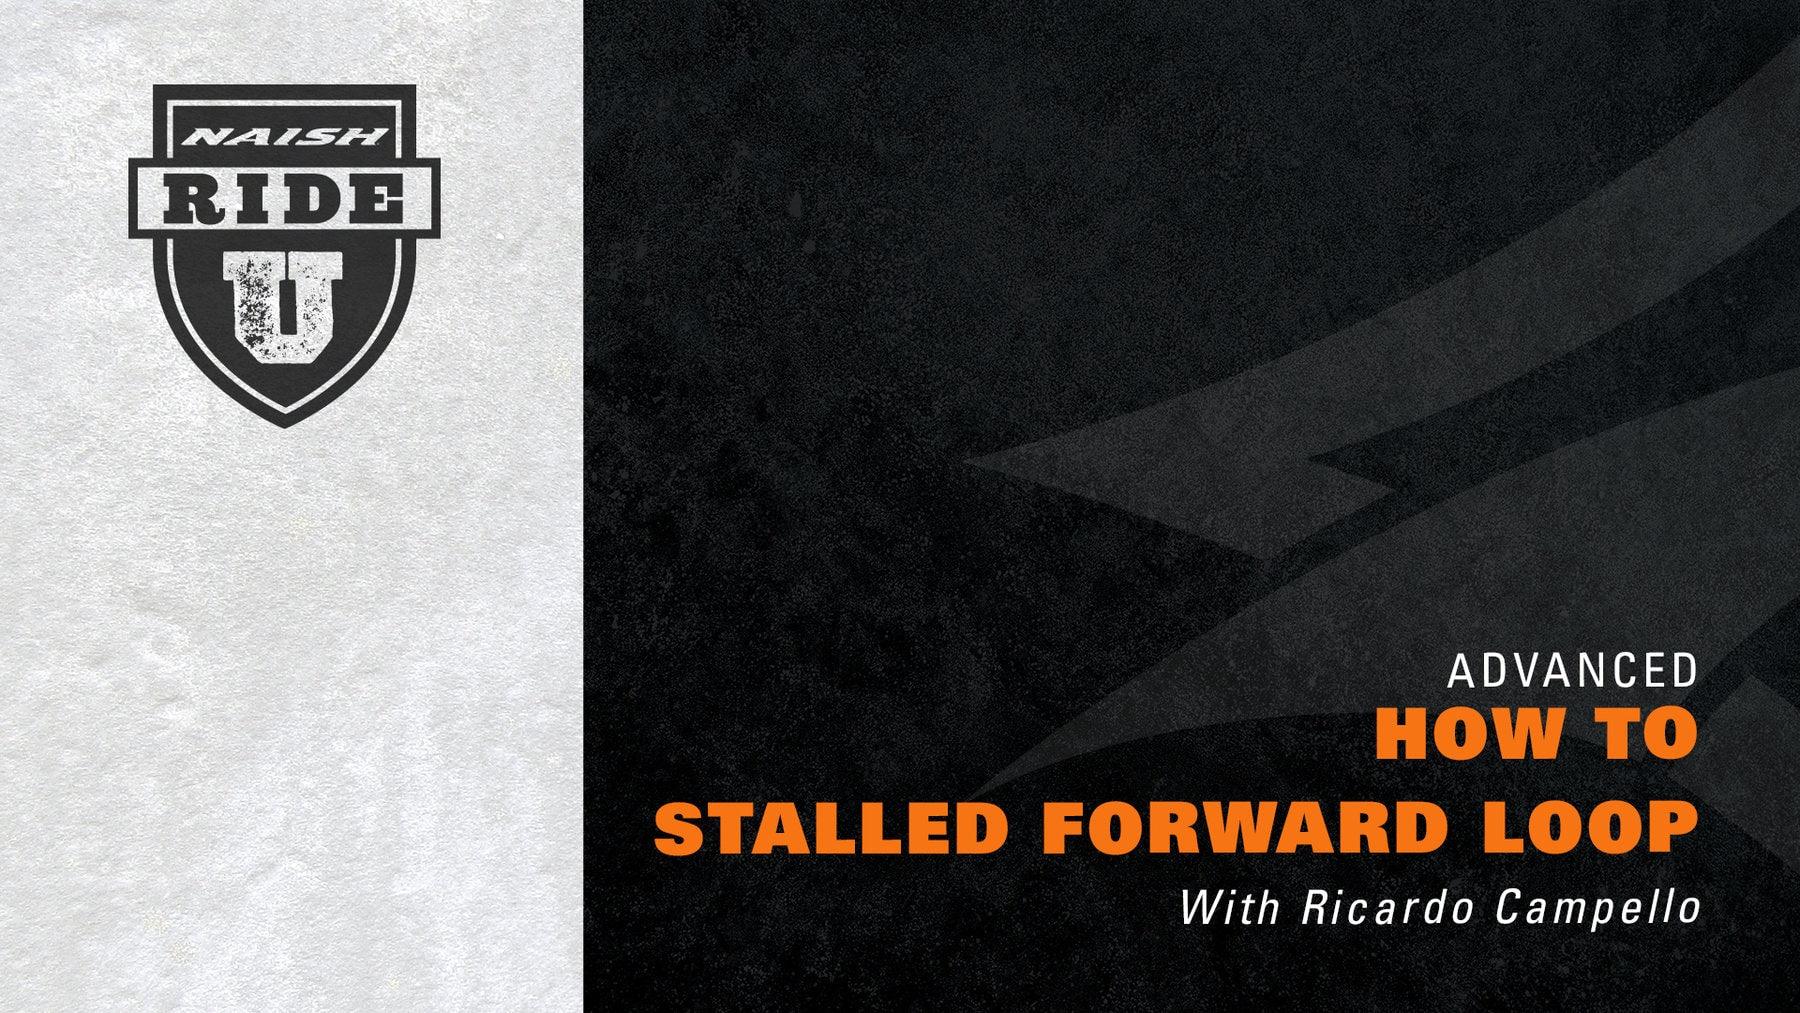 How to Stalled Forward Loop with Ricardo Campello - Naish.com